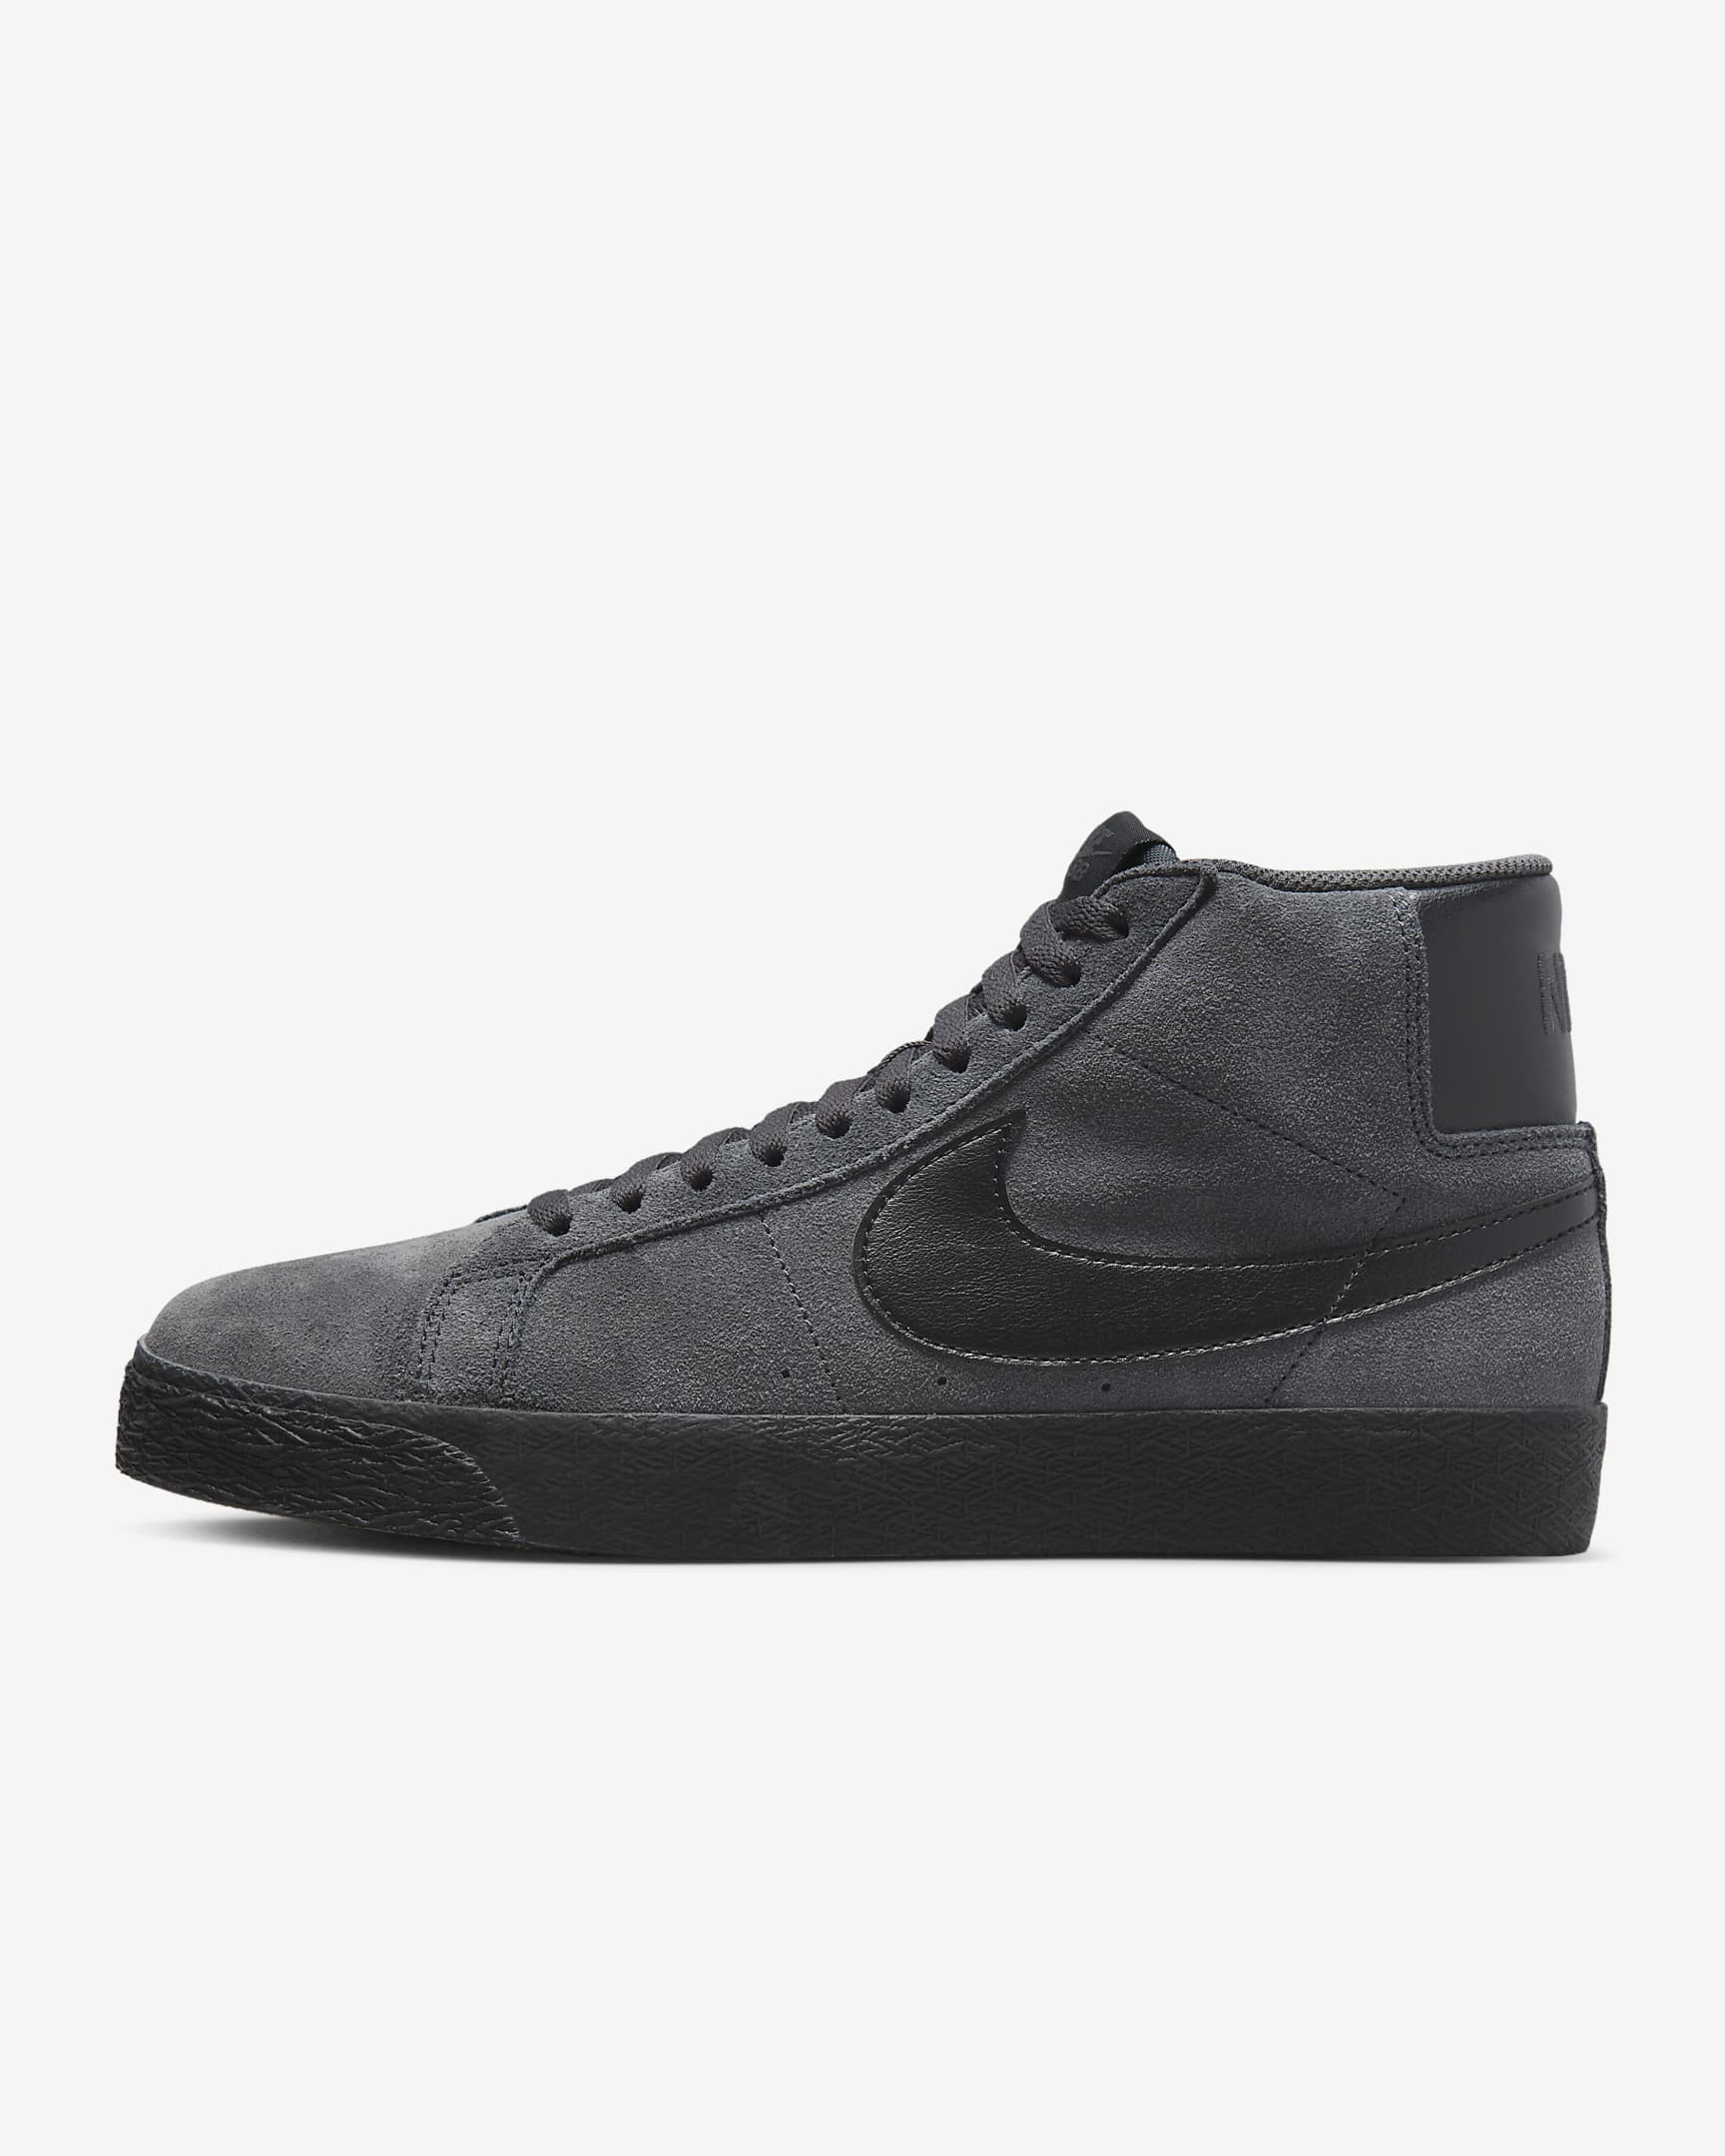 Nike SB Zoom Blazer Mid Shoe - Anthracite/Anthracite/Black/Black